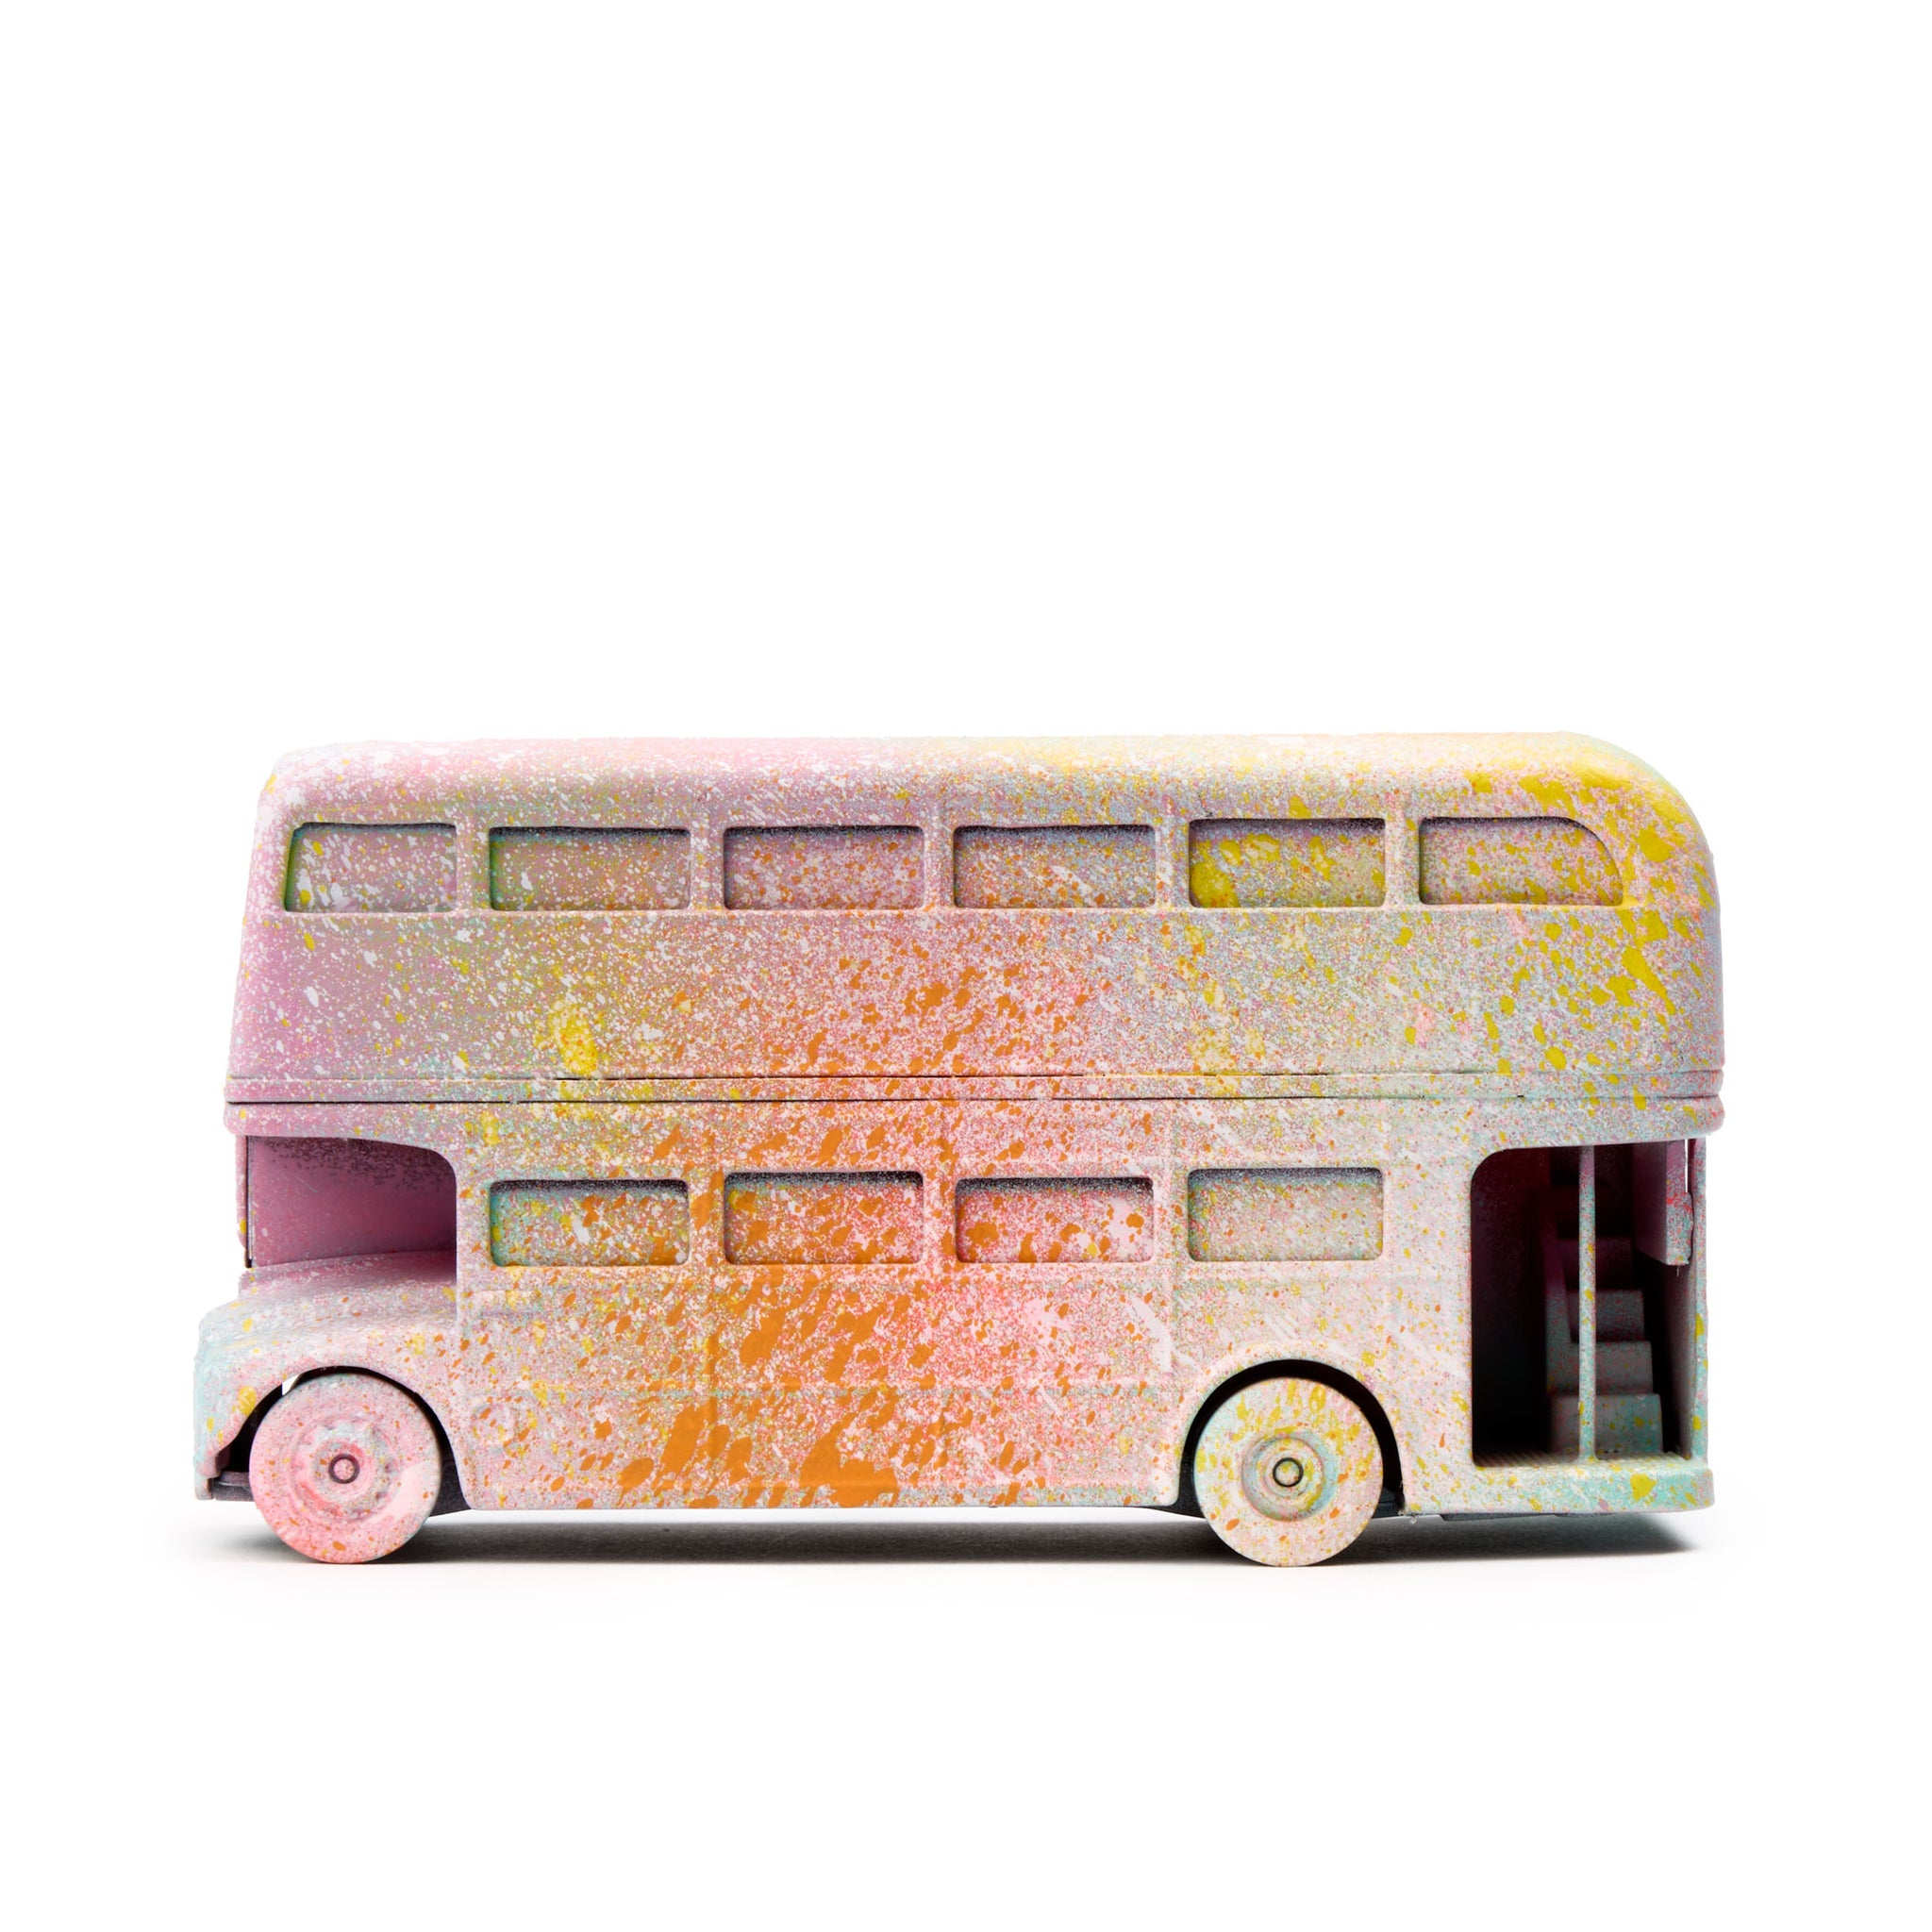 Adam Handler Toy Bus